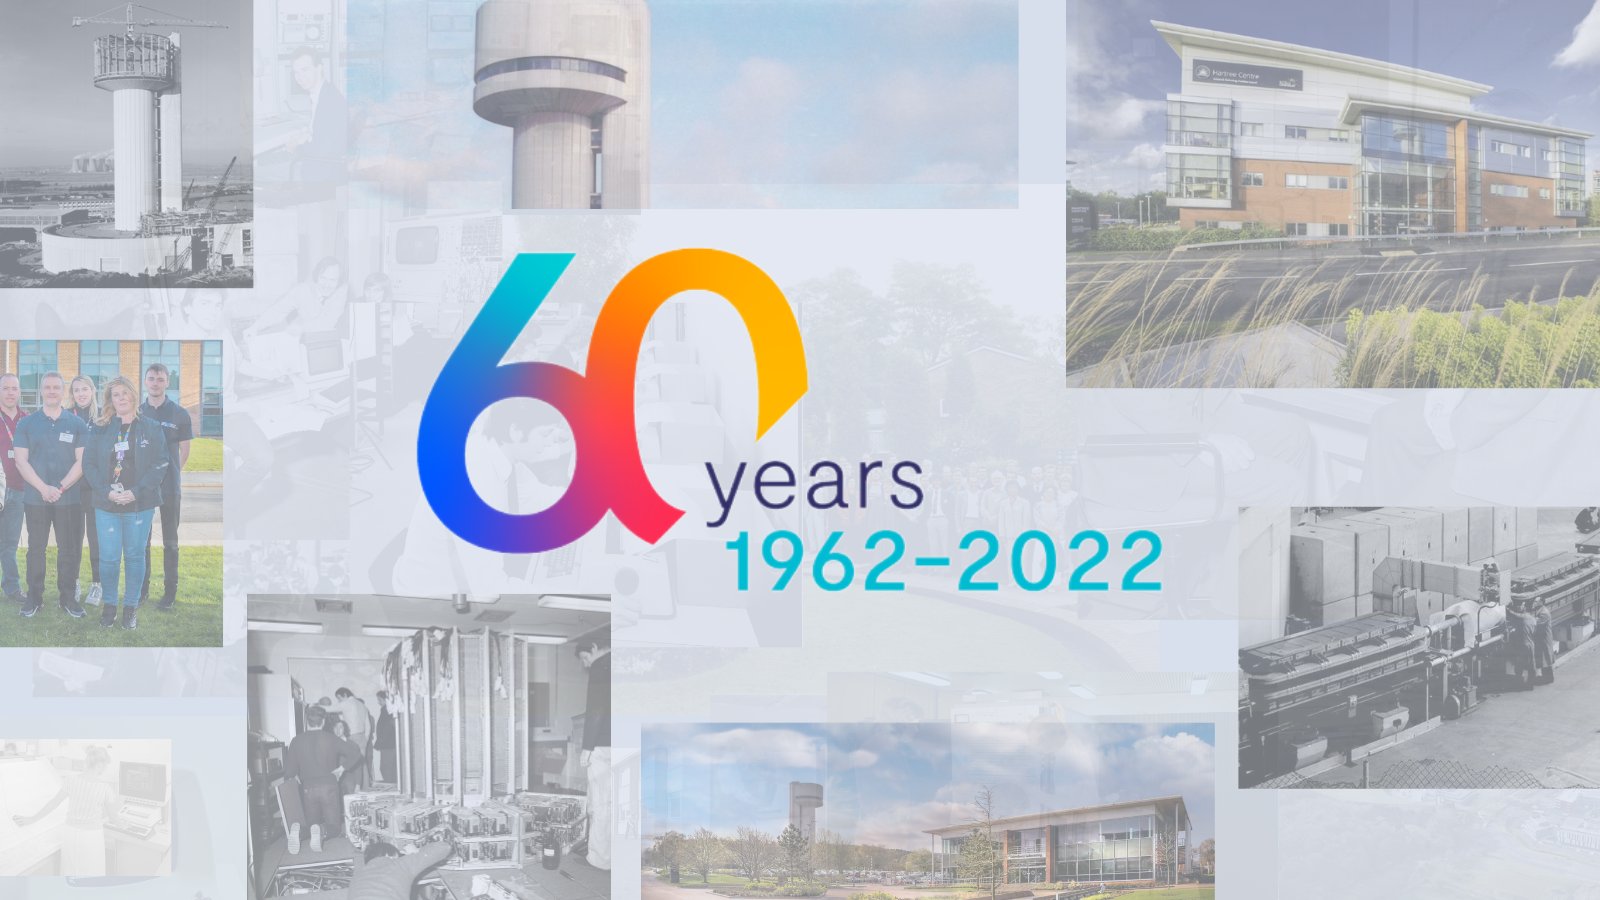 60 years. 1962 - 2022.